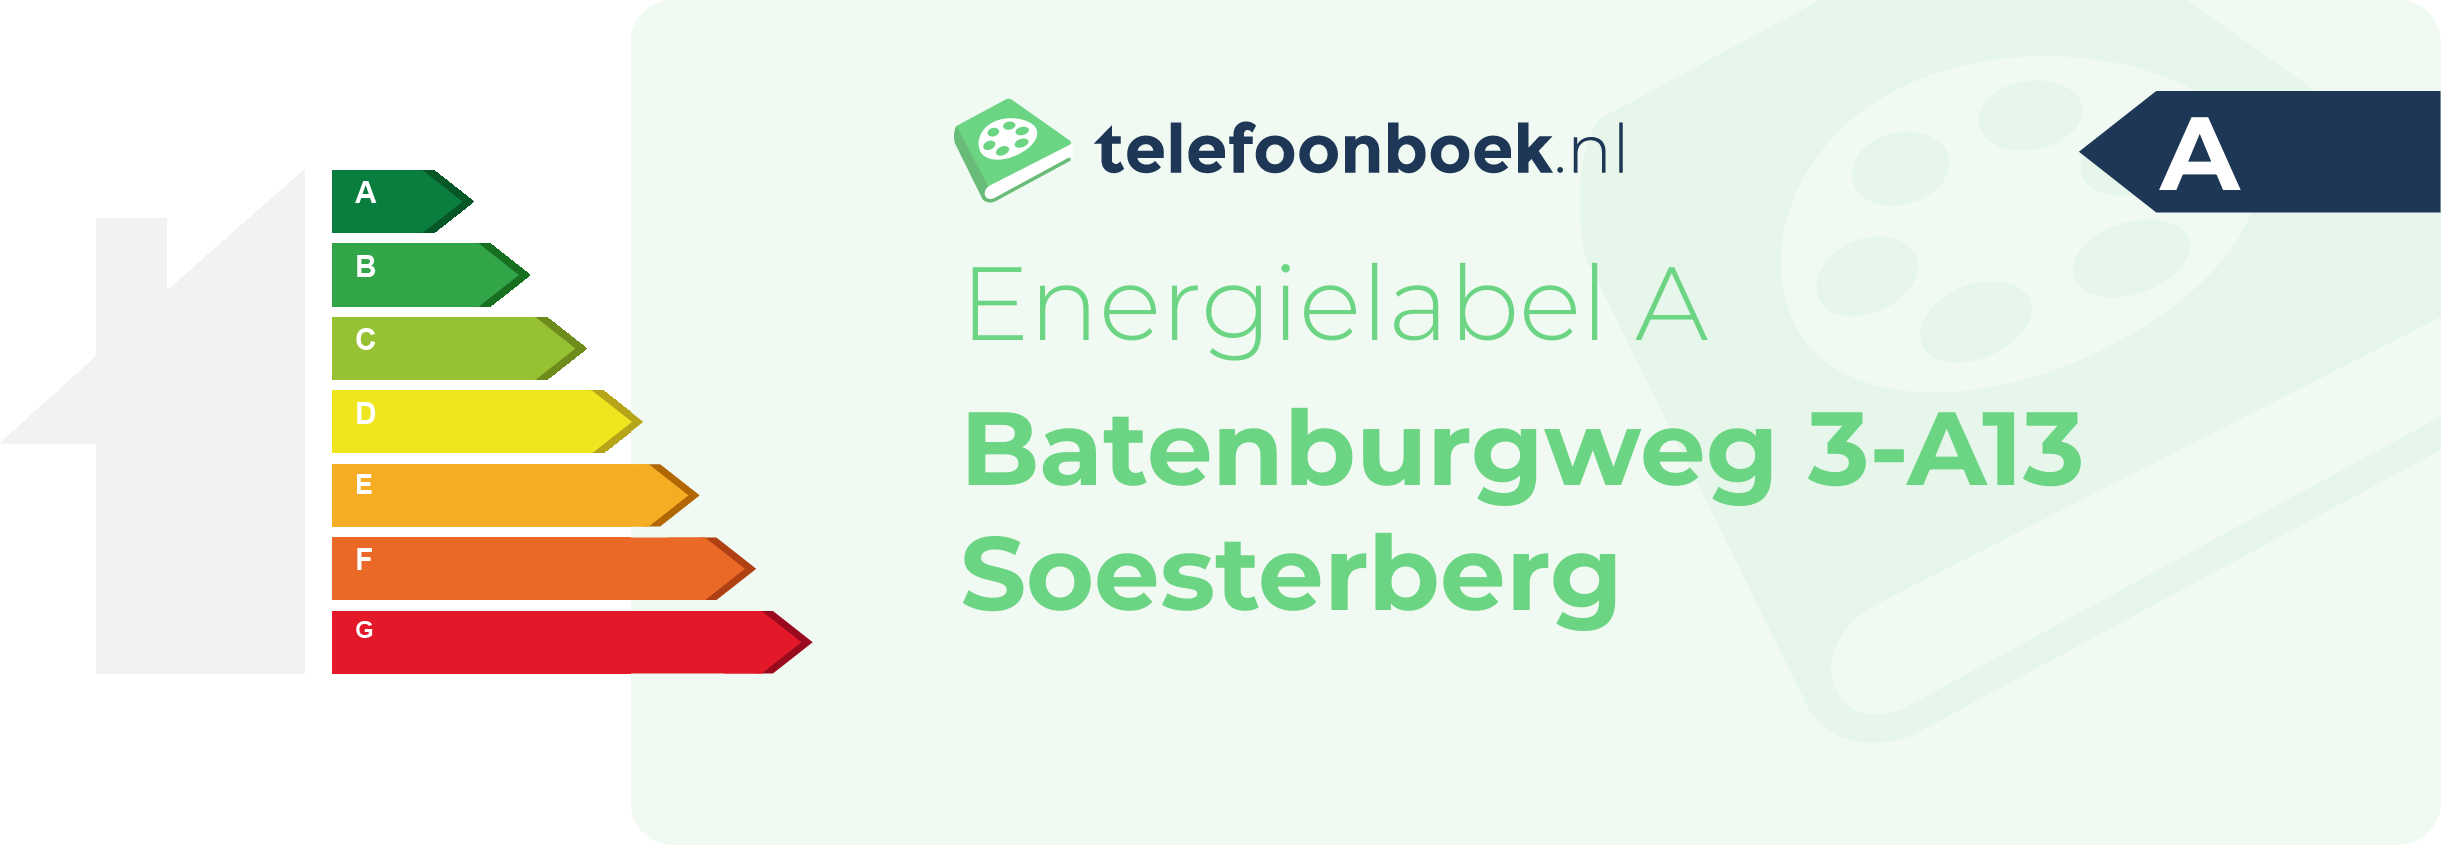 Energielabel Batenburgweg 3-A13 Soesterberg